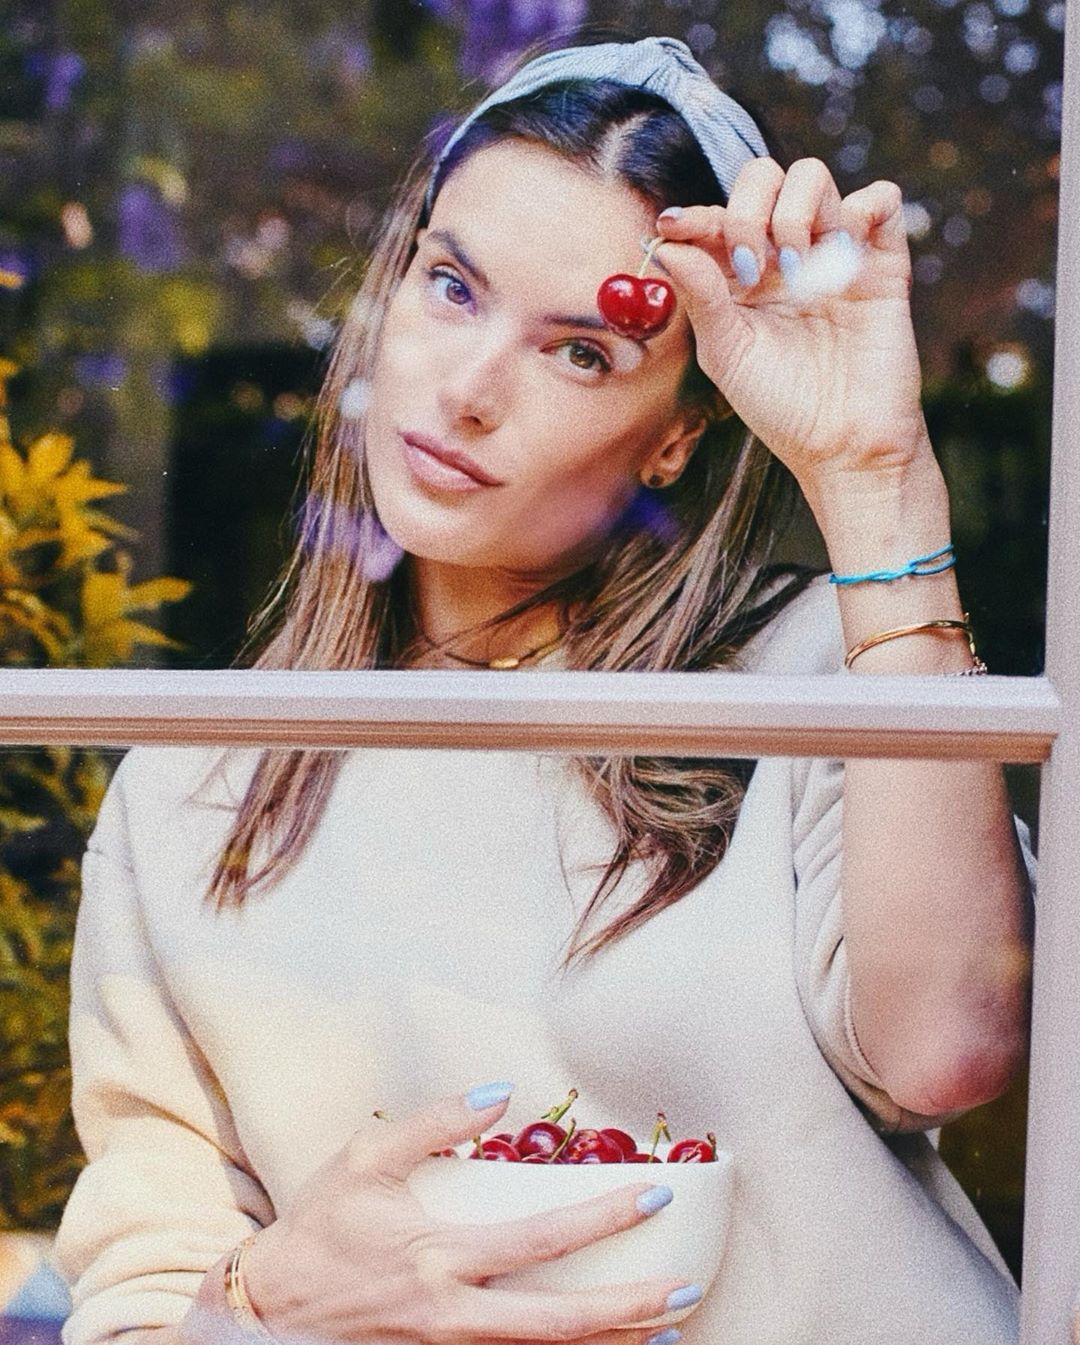 Alessandra Ambrosio Eating Cherries in her Panties! - Photo 2